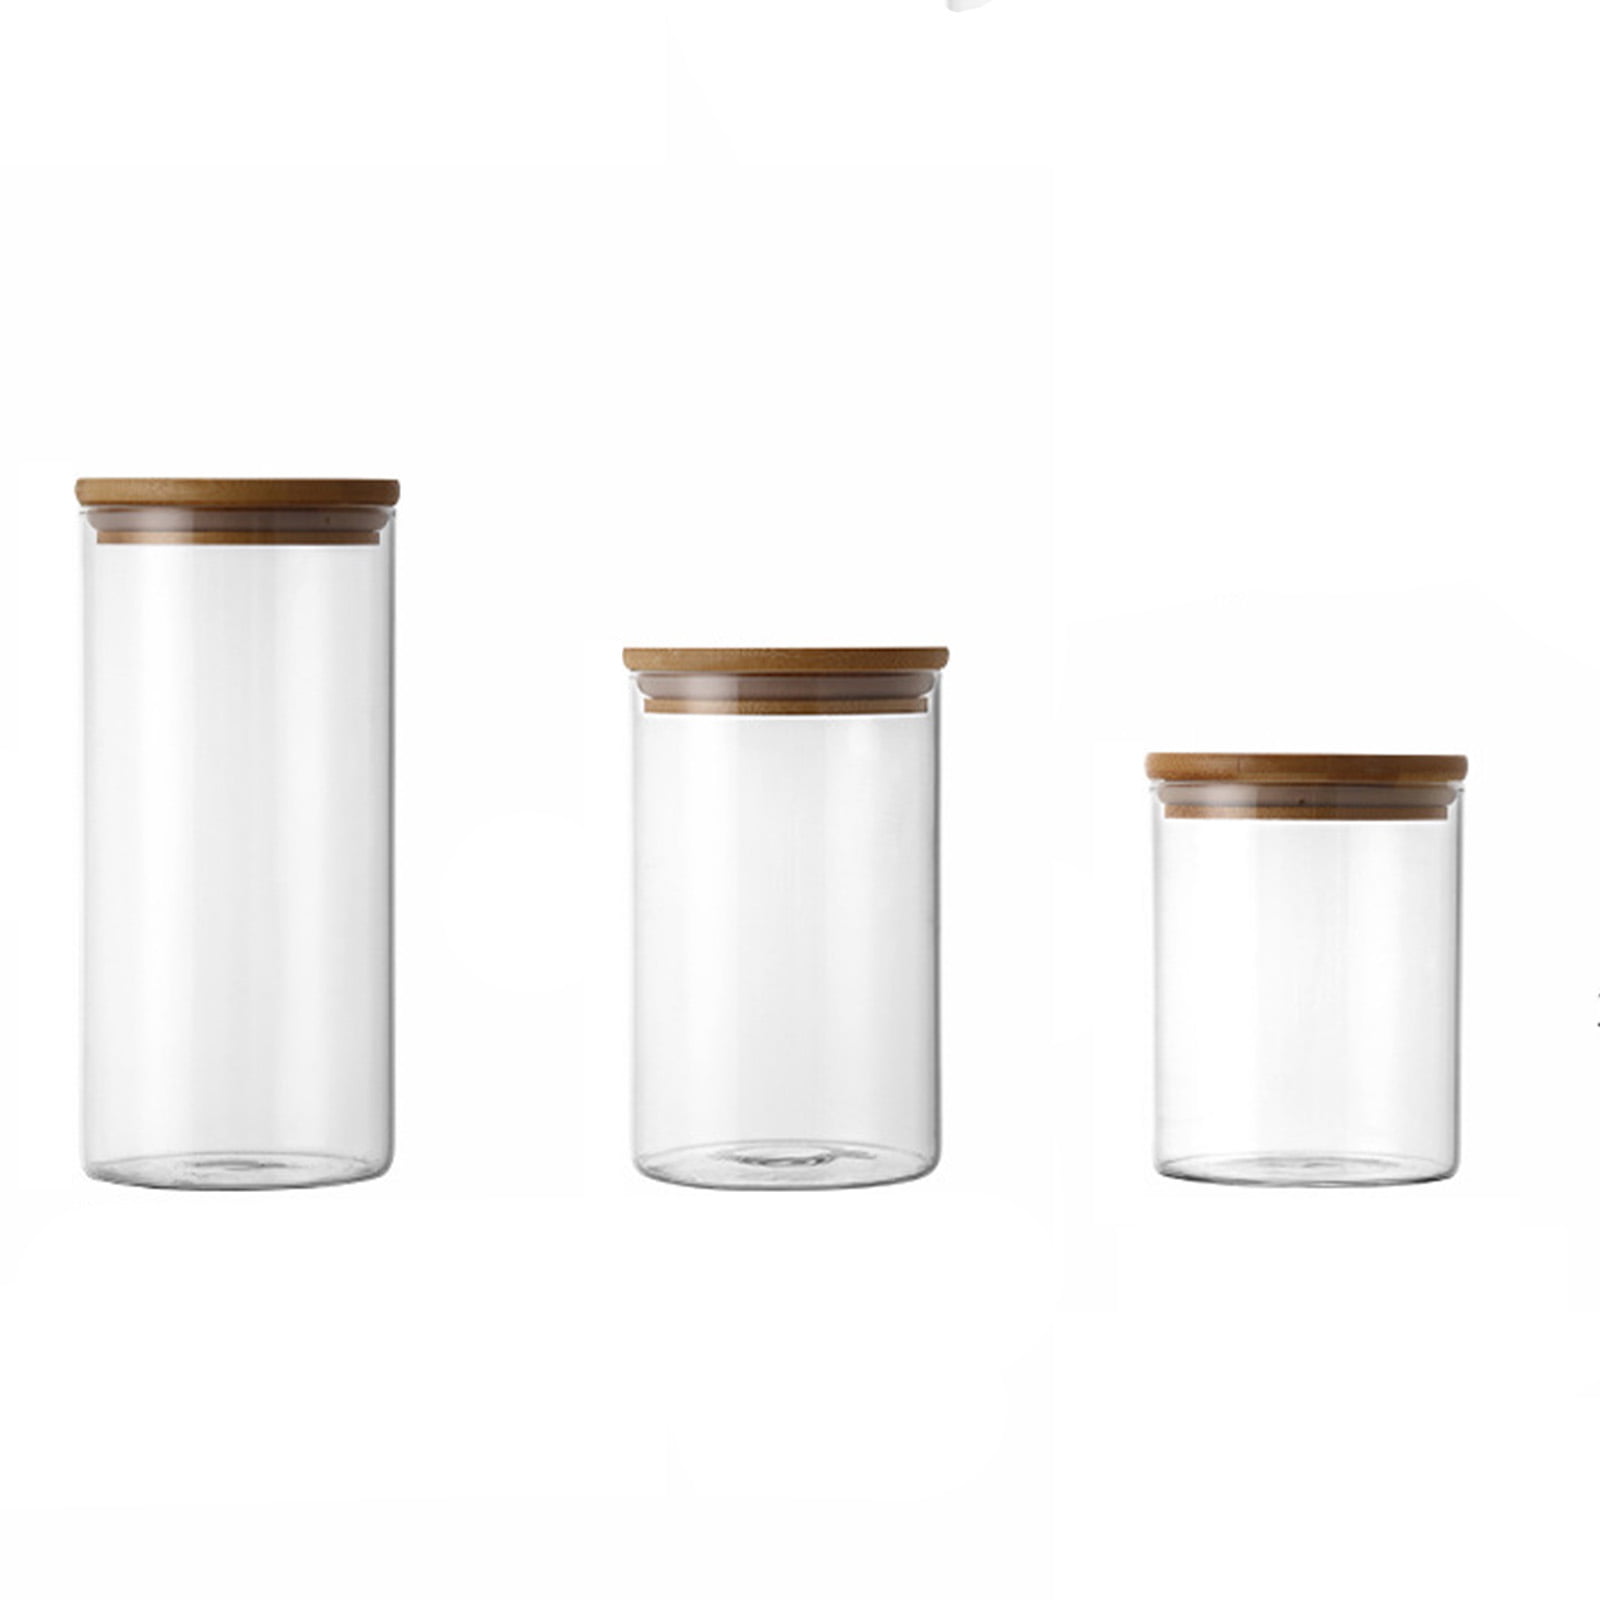 Pluokvzr Glass Jars with Bamboo Lids,6 oz Glass Food Storage Jars